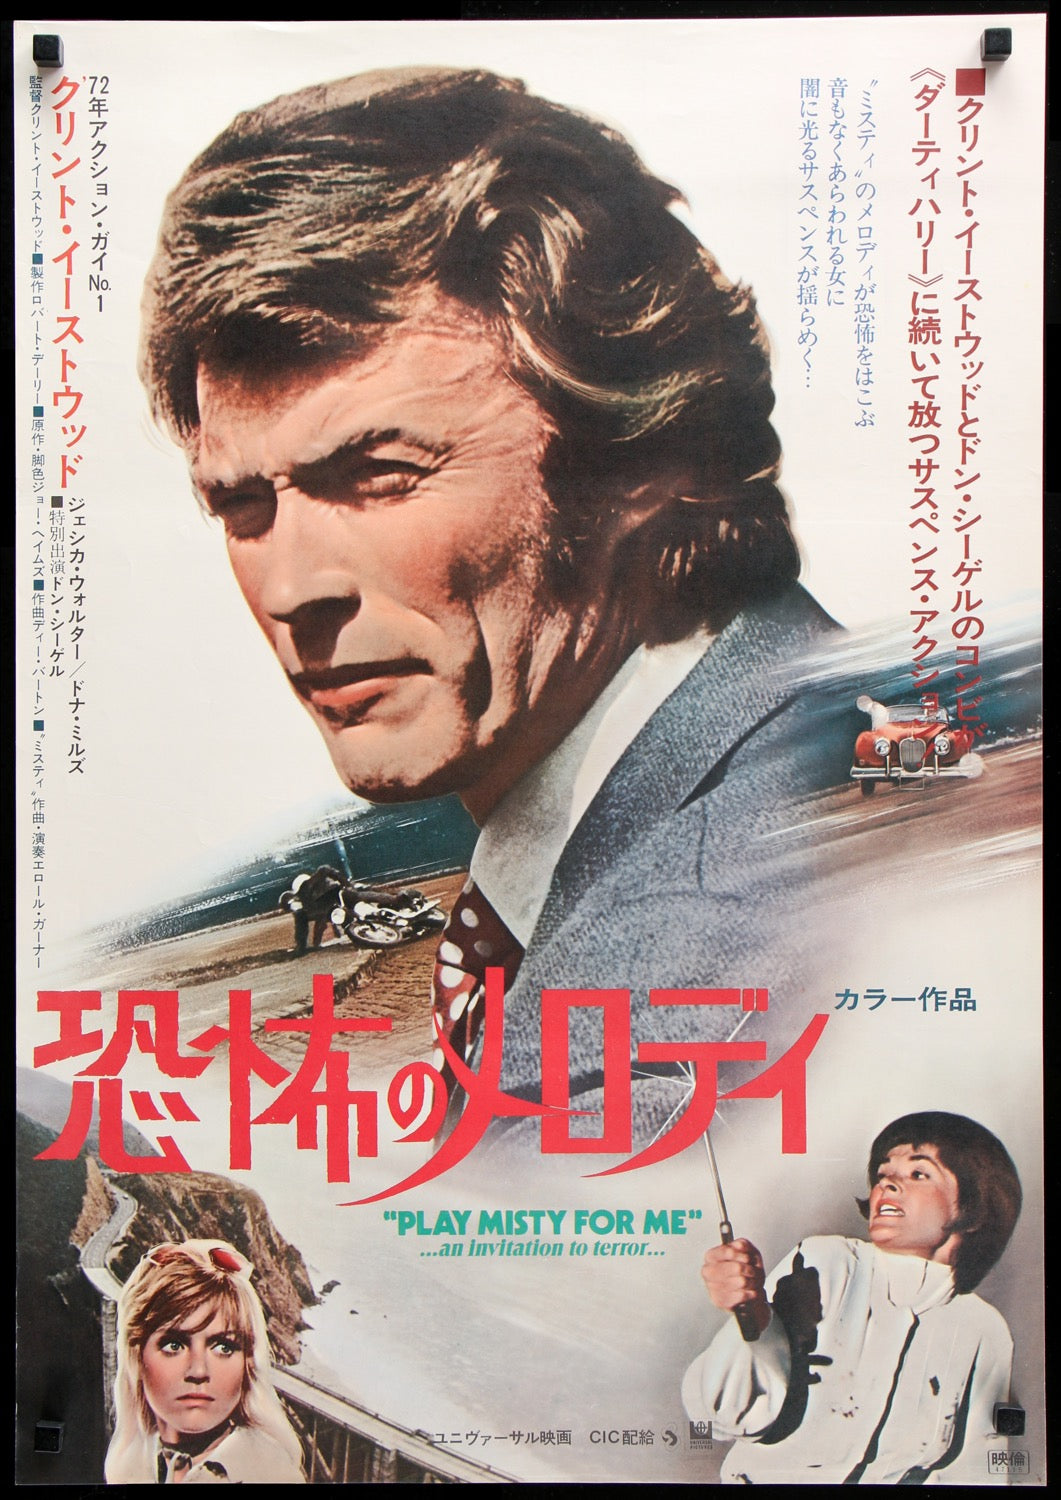 Play Misty For Me (1971) original movie poster for sale at Original Film Art